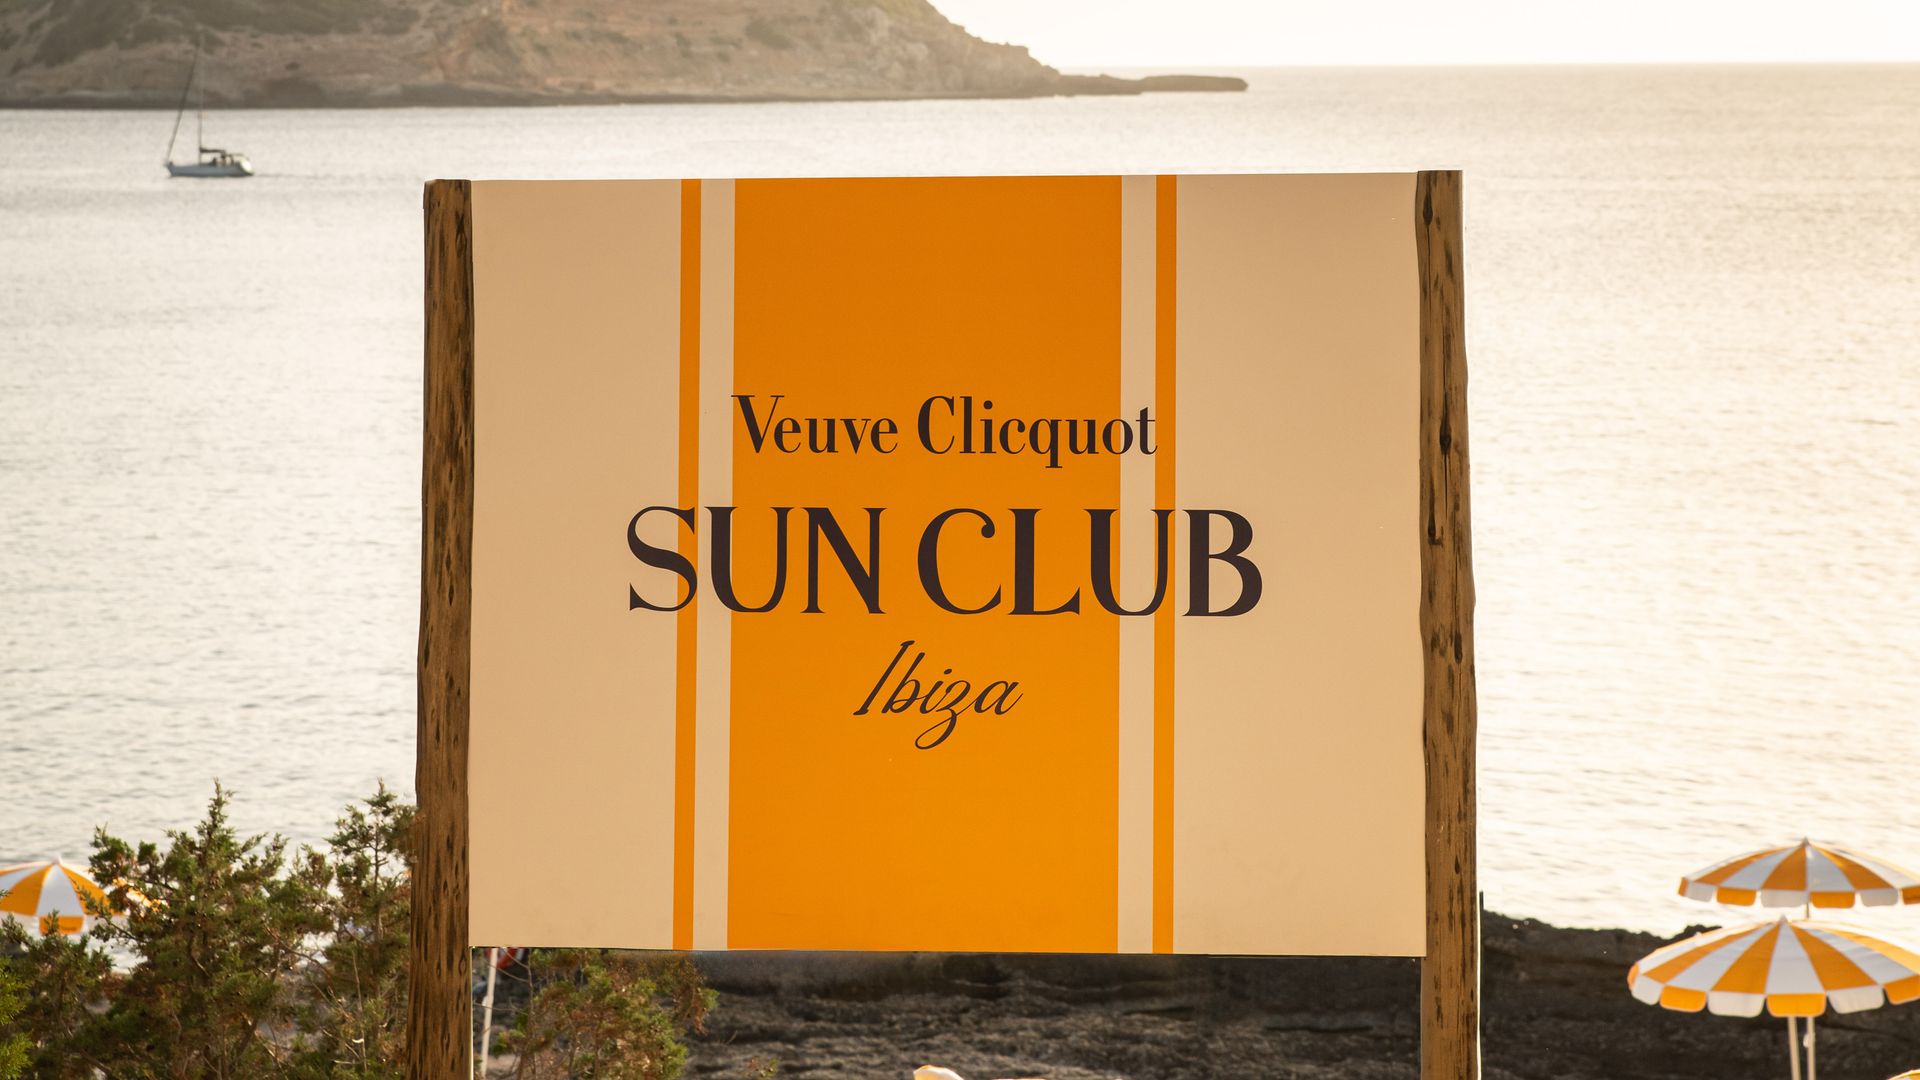 Visita el Sun Club de Veuve Clicquot en Ibiza